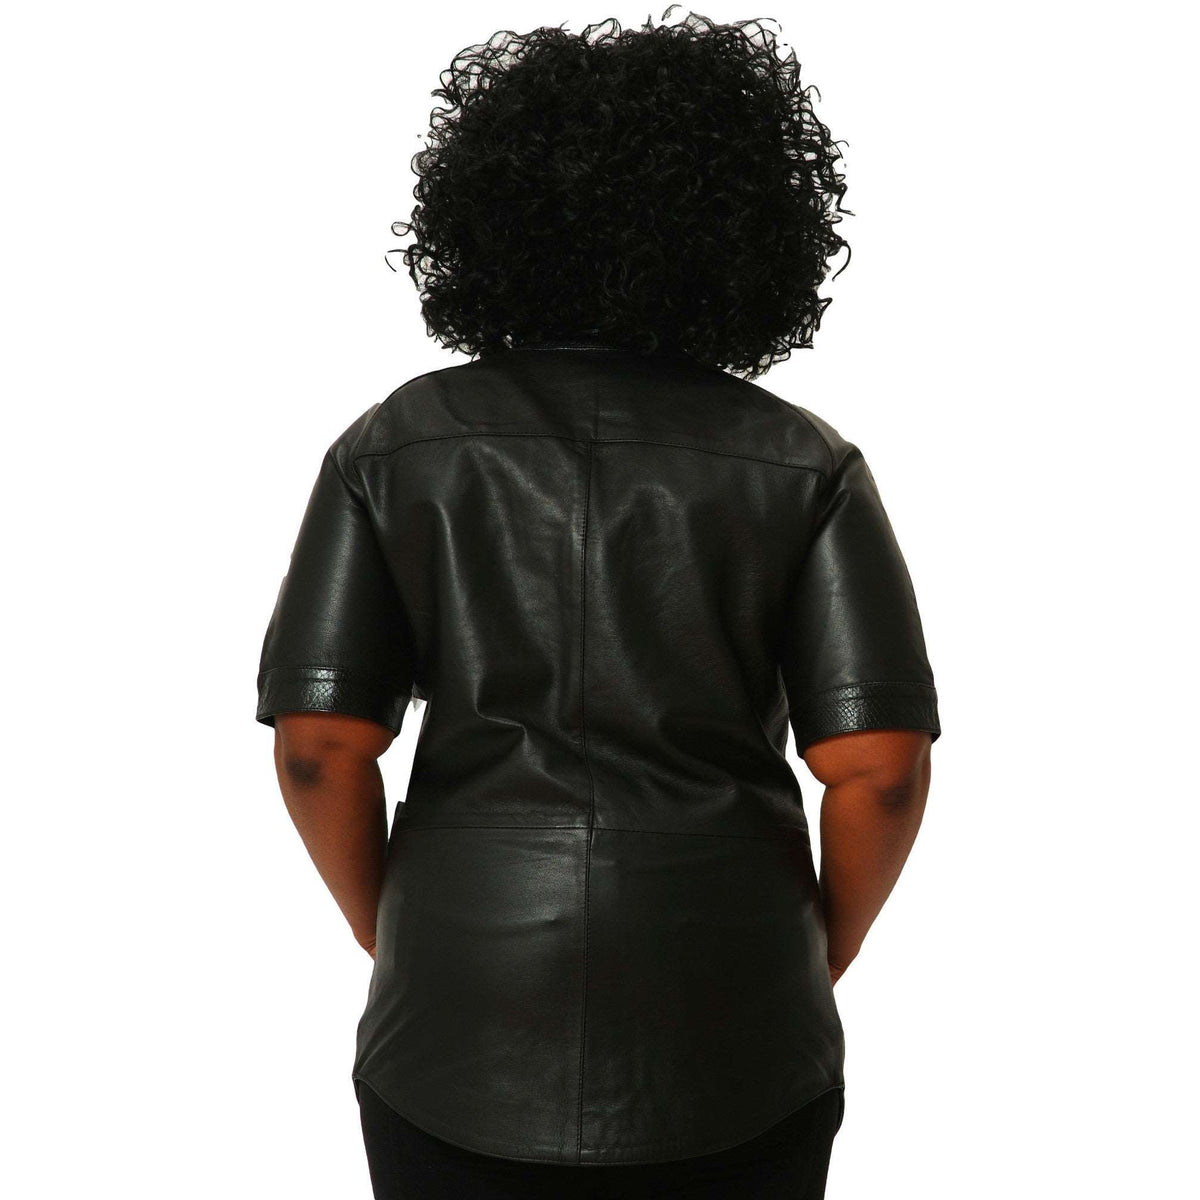 Womens black leather baseball jersey snakeskin trim back